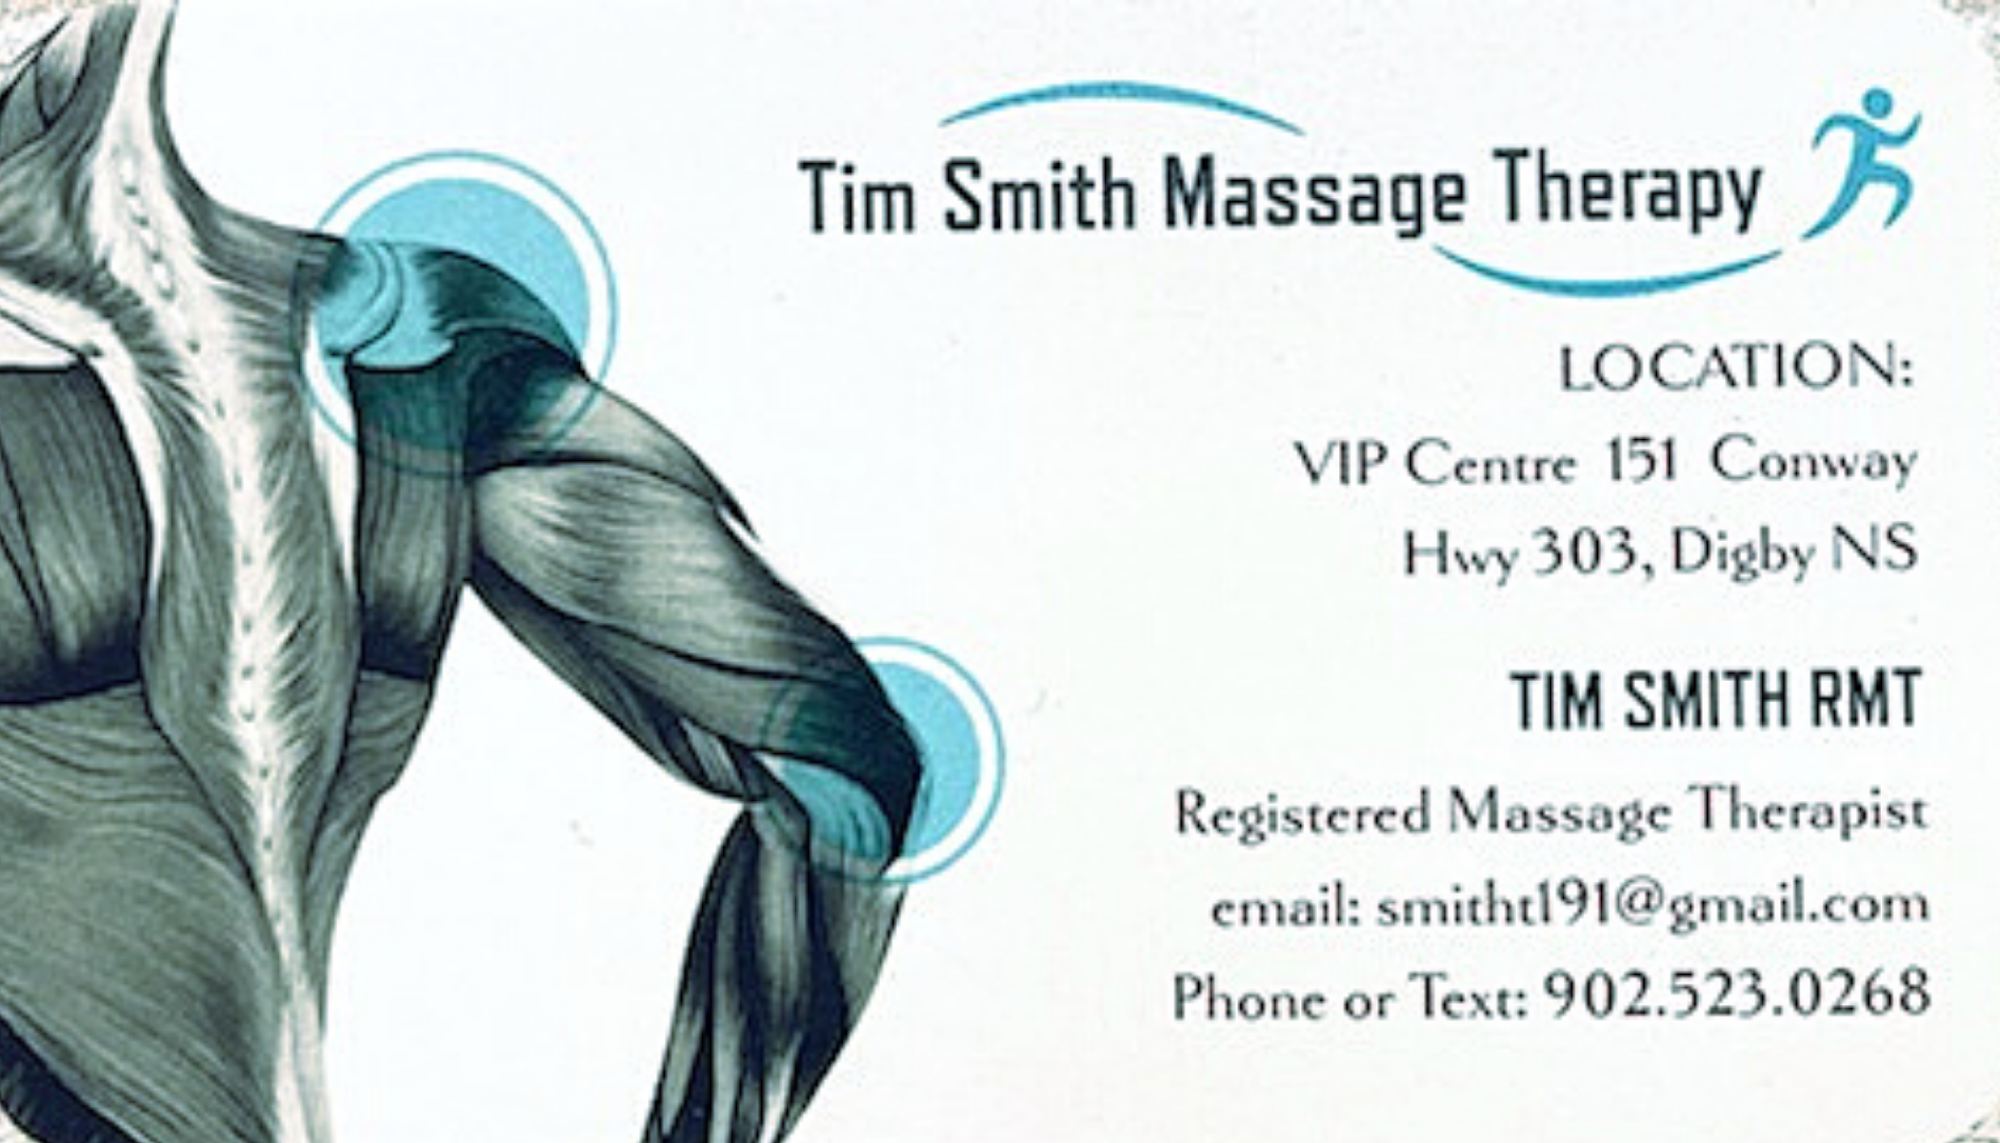 Tim Smith RMT Massage Therapy Digby 151 NS-303, Digby Nova Scotia B0V 1A0